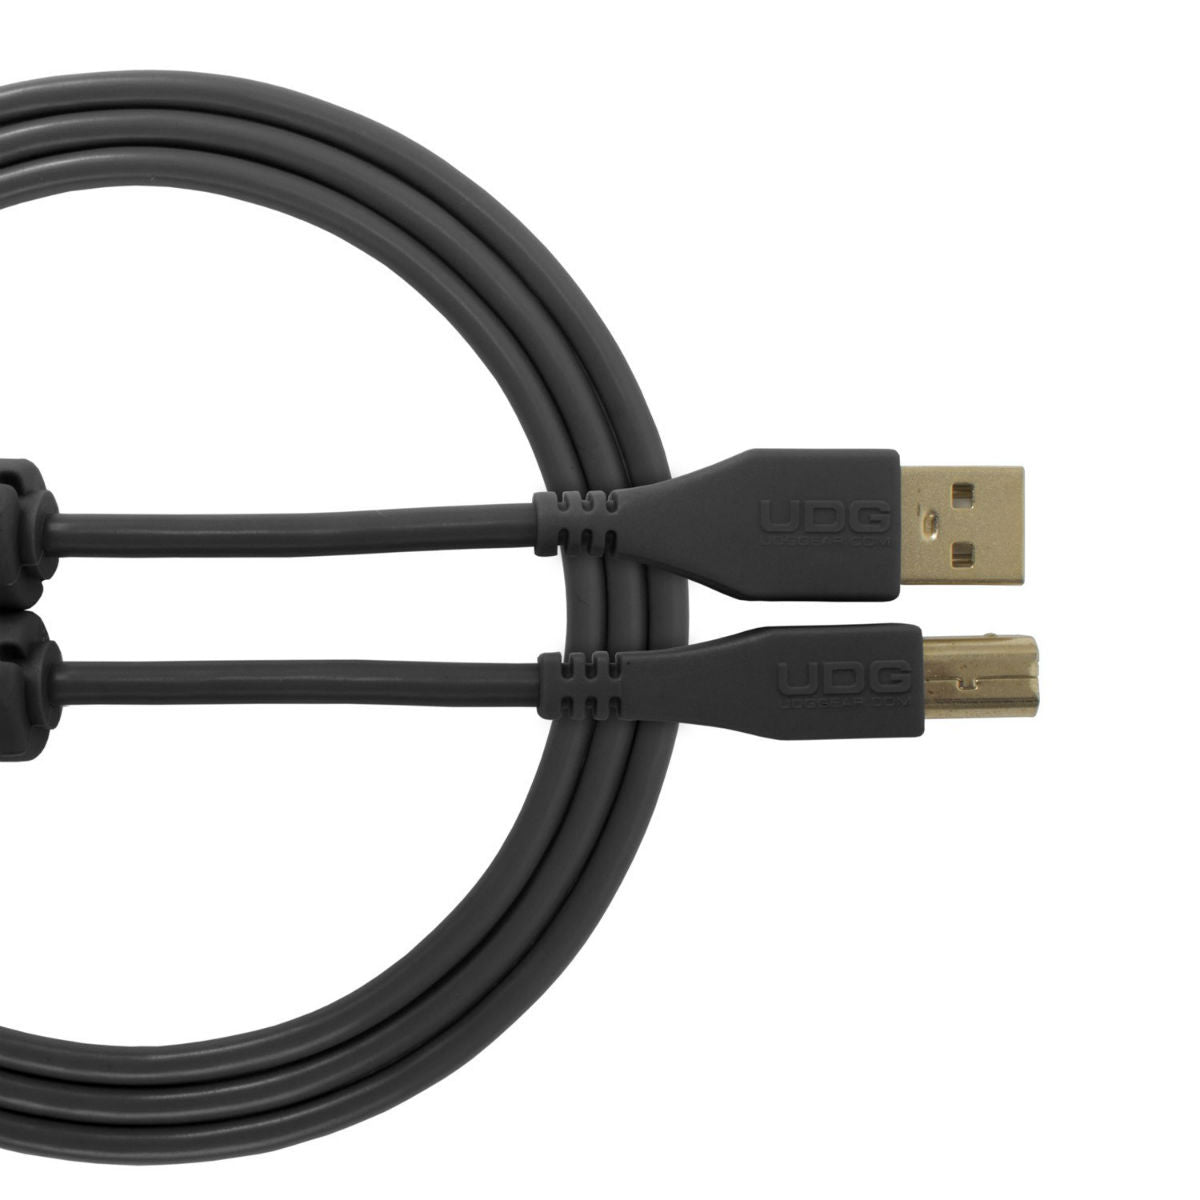 UDG USB Cable A-B 3m Black U95003BL